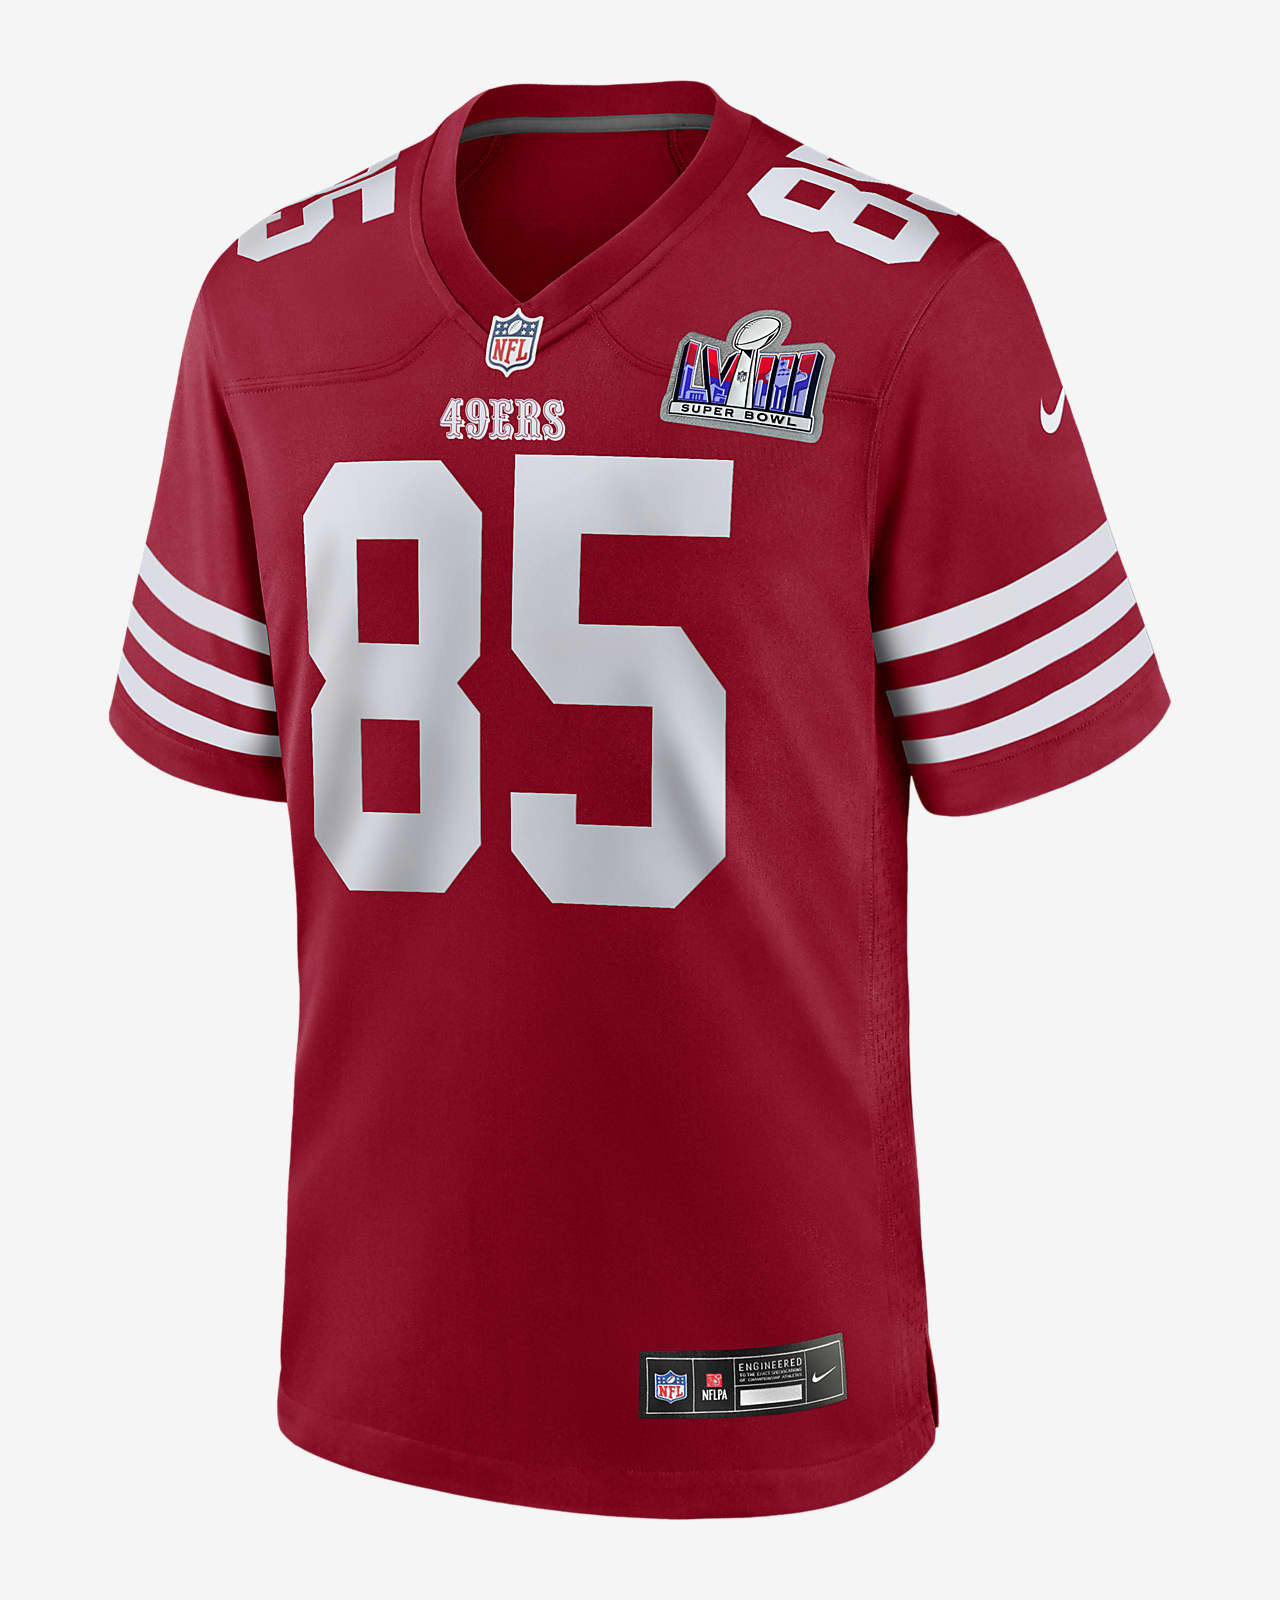 Jersey Nike de la NFL Game para hombre George Kittle San Francisco 49ers Super Bowl LVIII